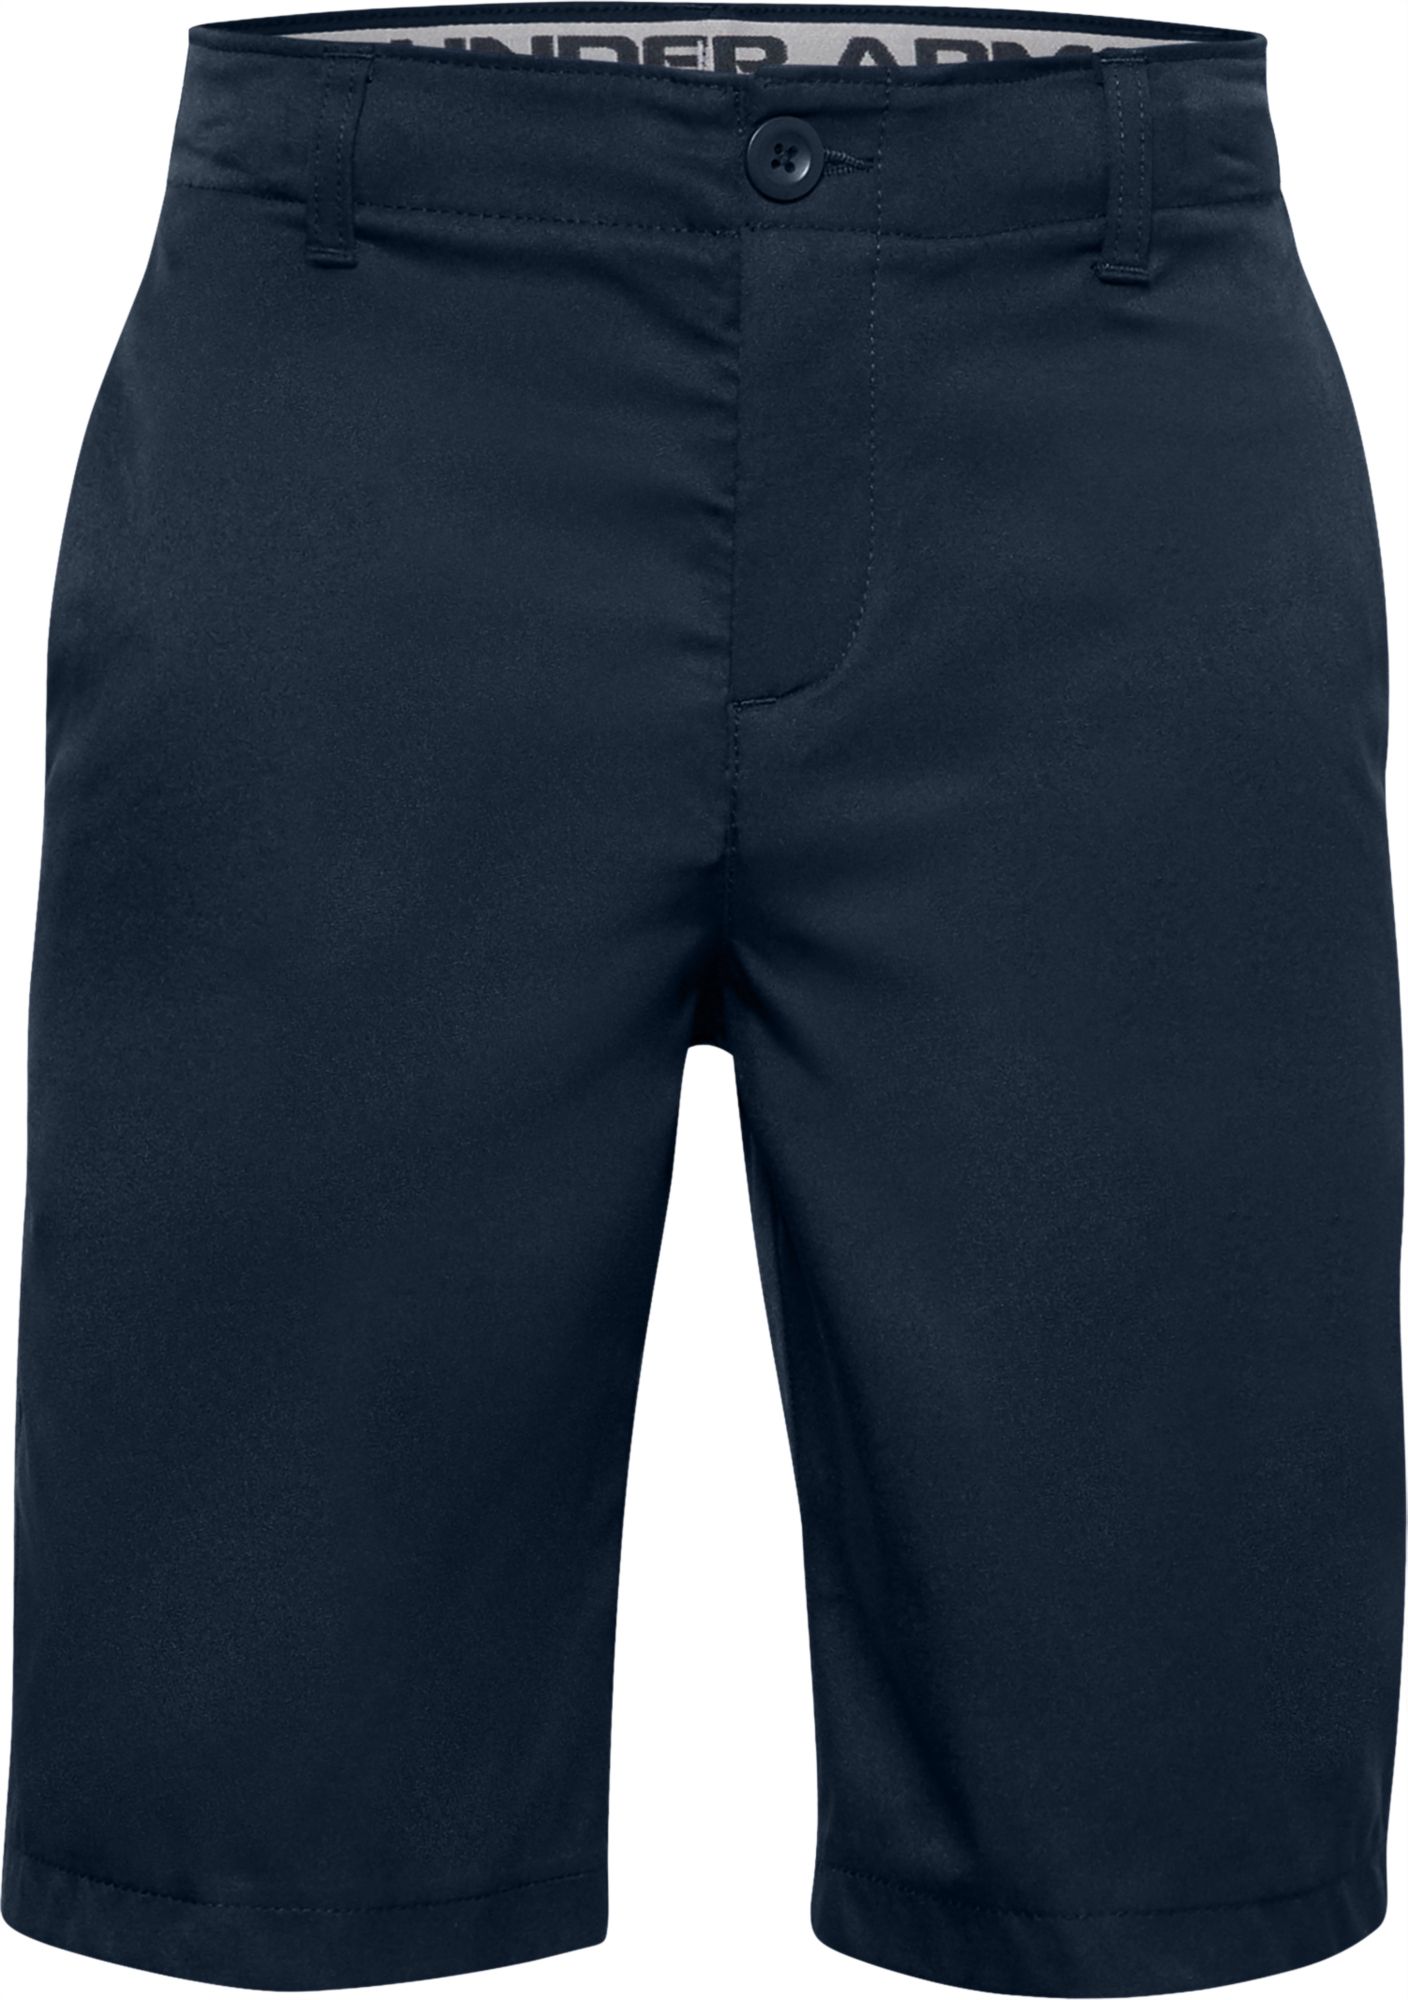 under armour navy golf shorts